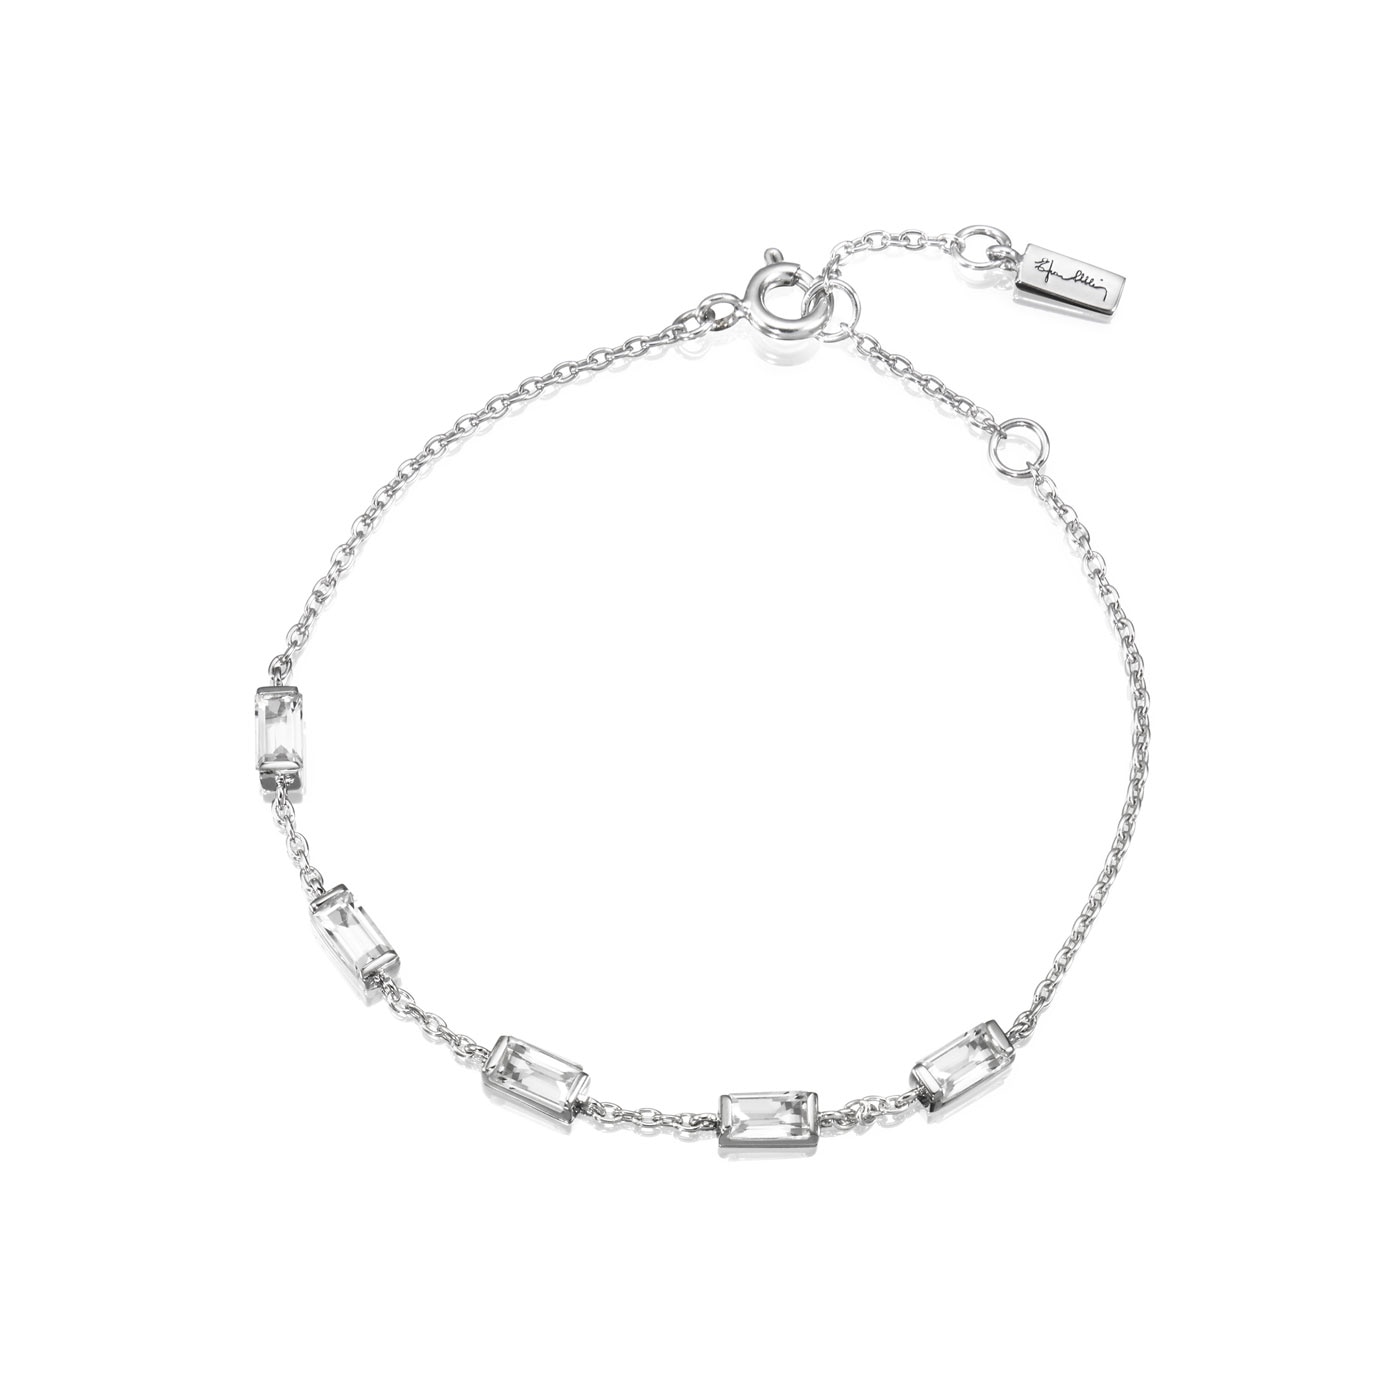 A Clear Dream Bracelet 16-19 cm